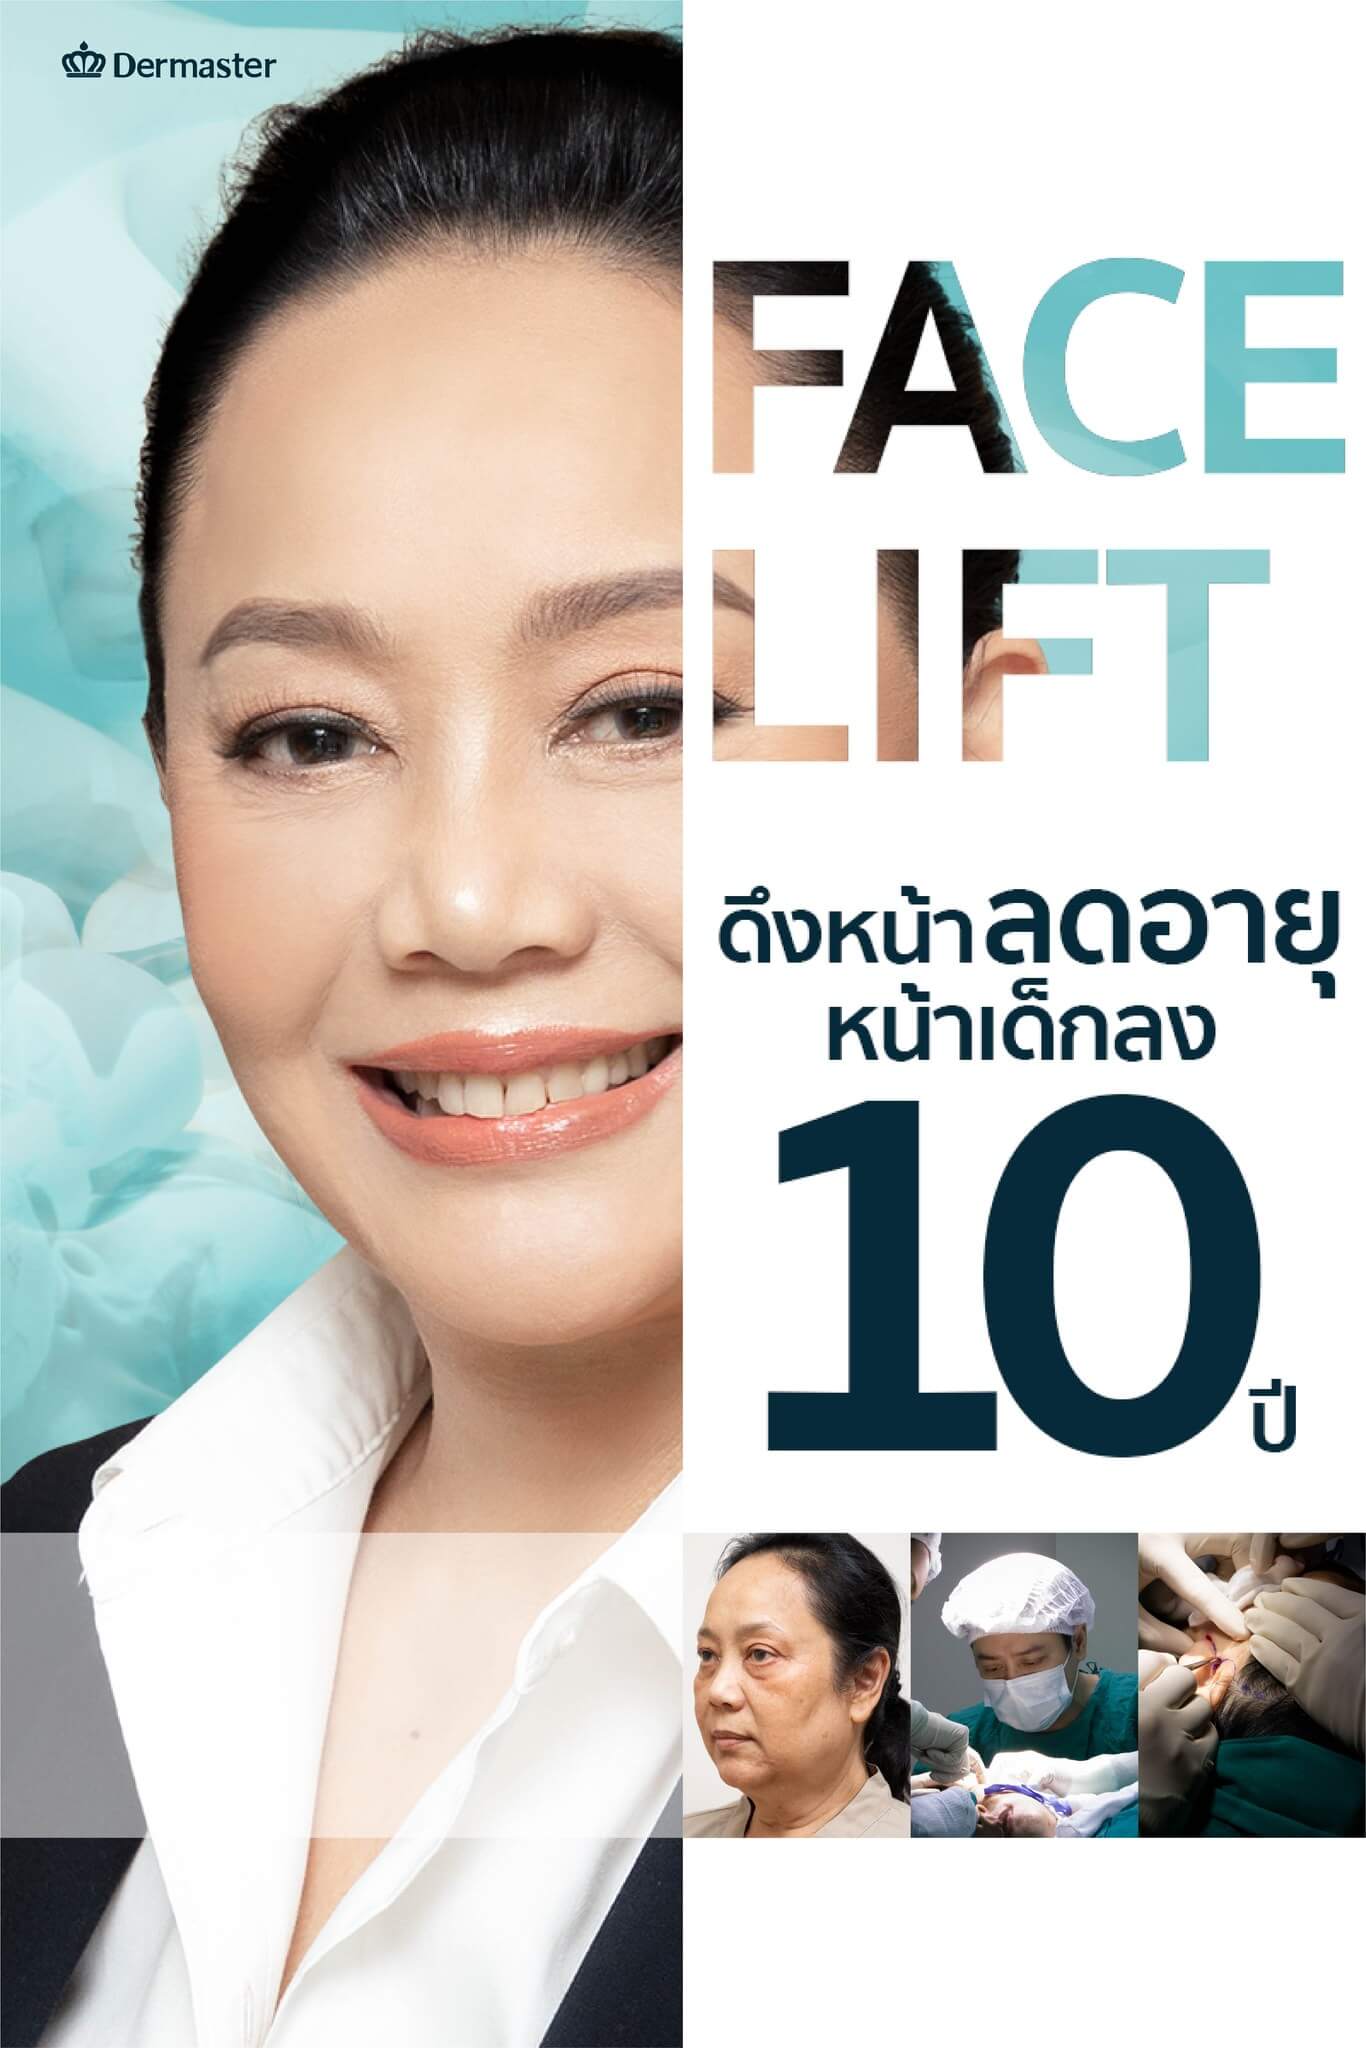 dermaster-thailand-facelift-mobile-view-banner 2